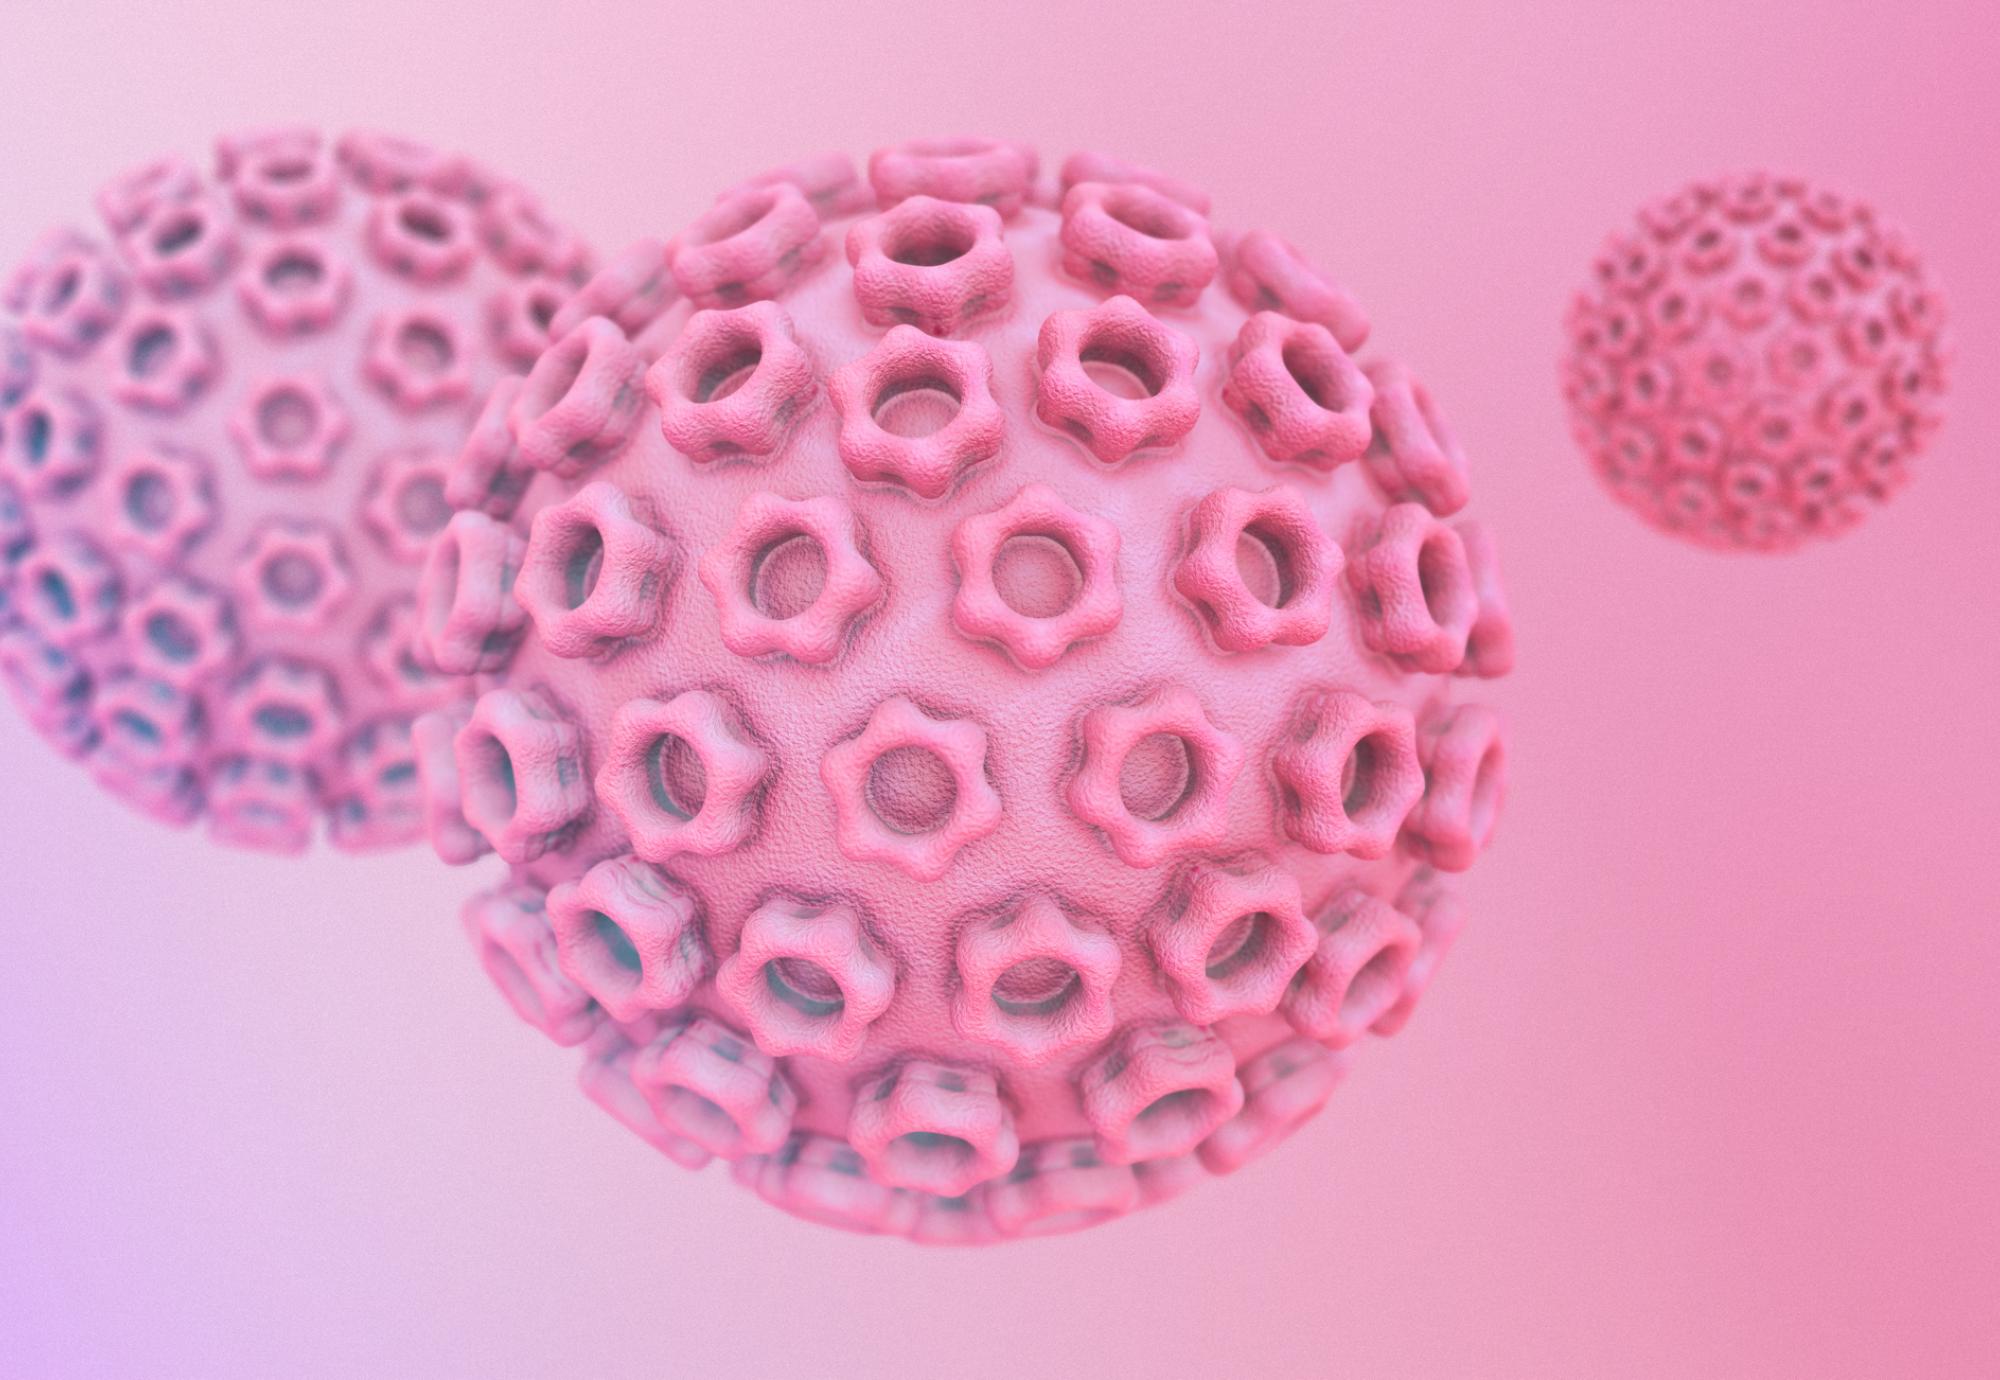 Artist impression of HPV virus